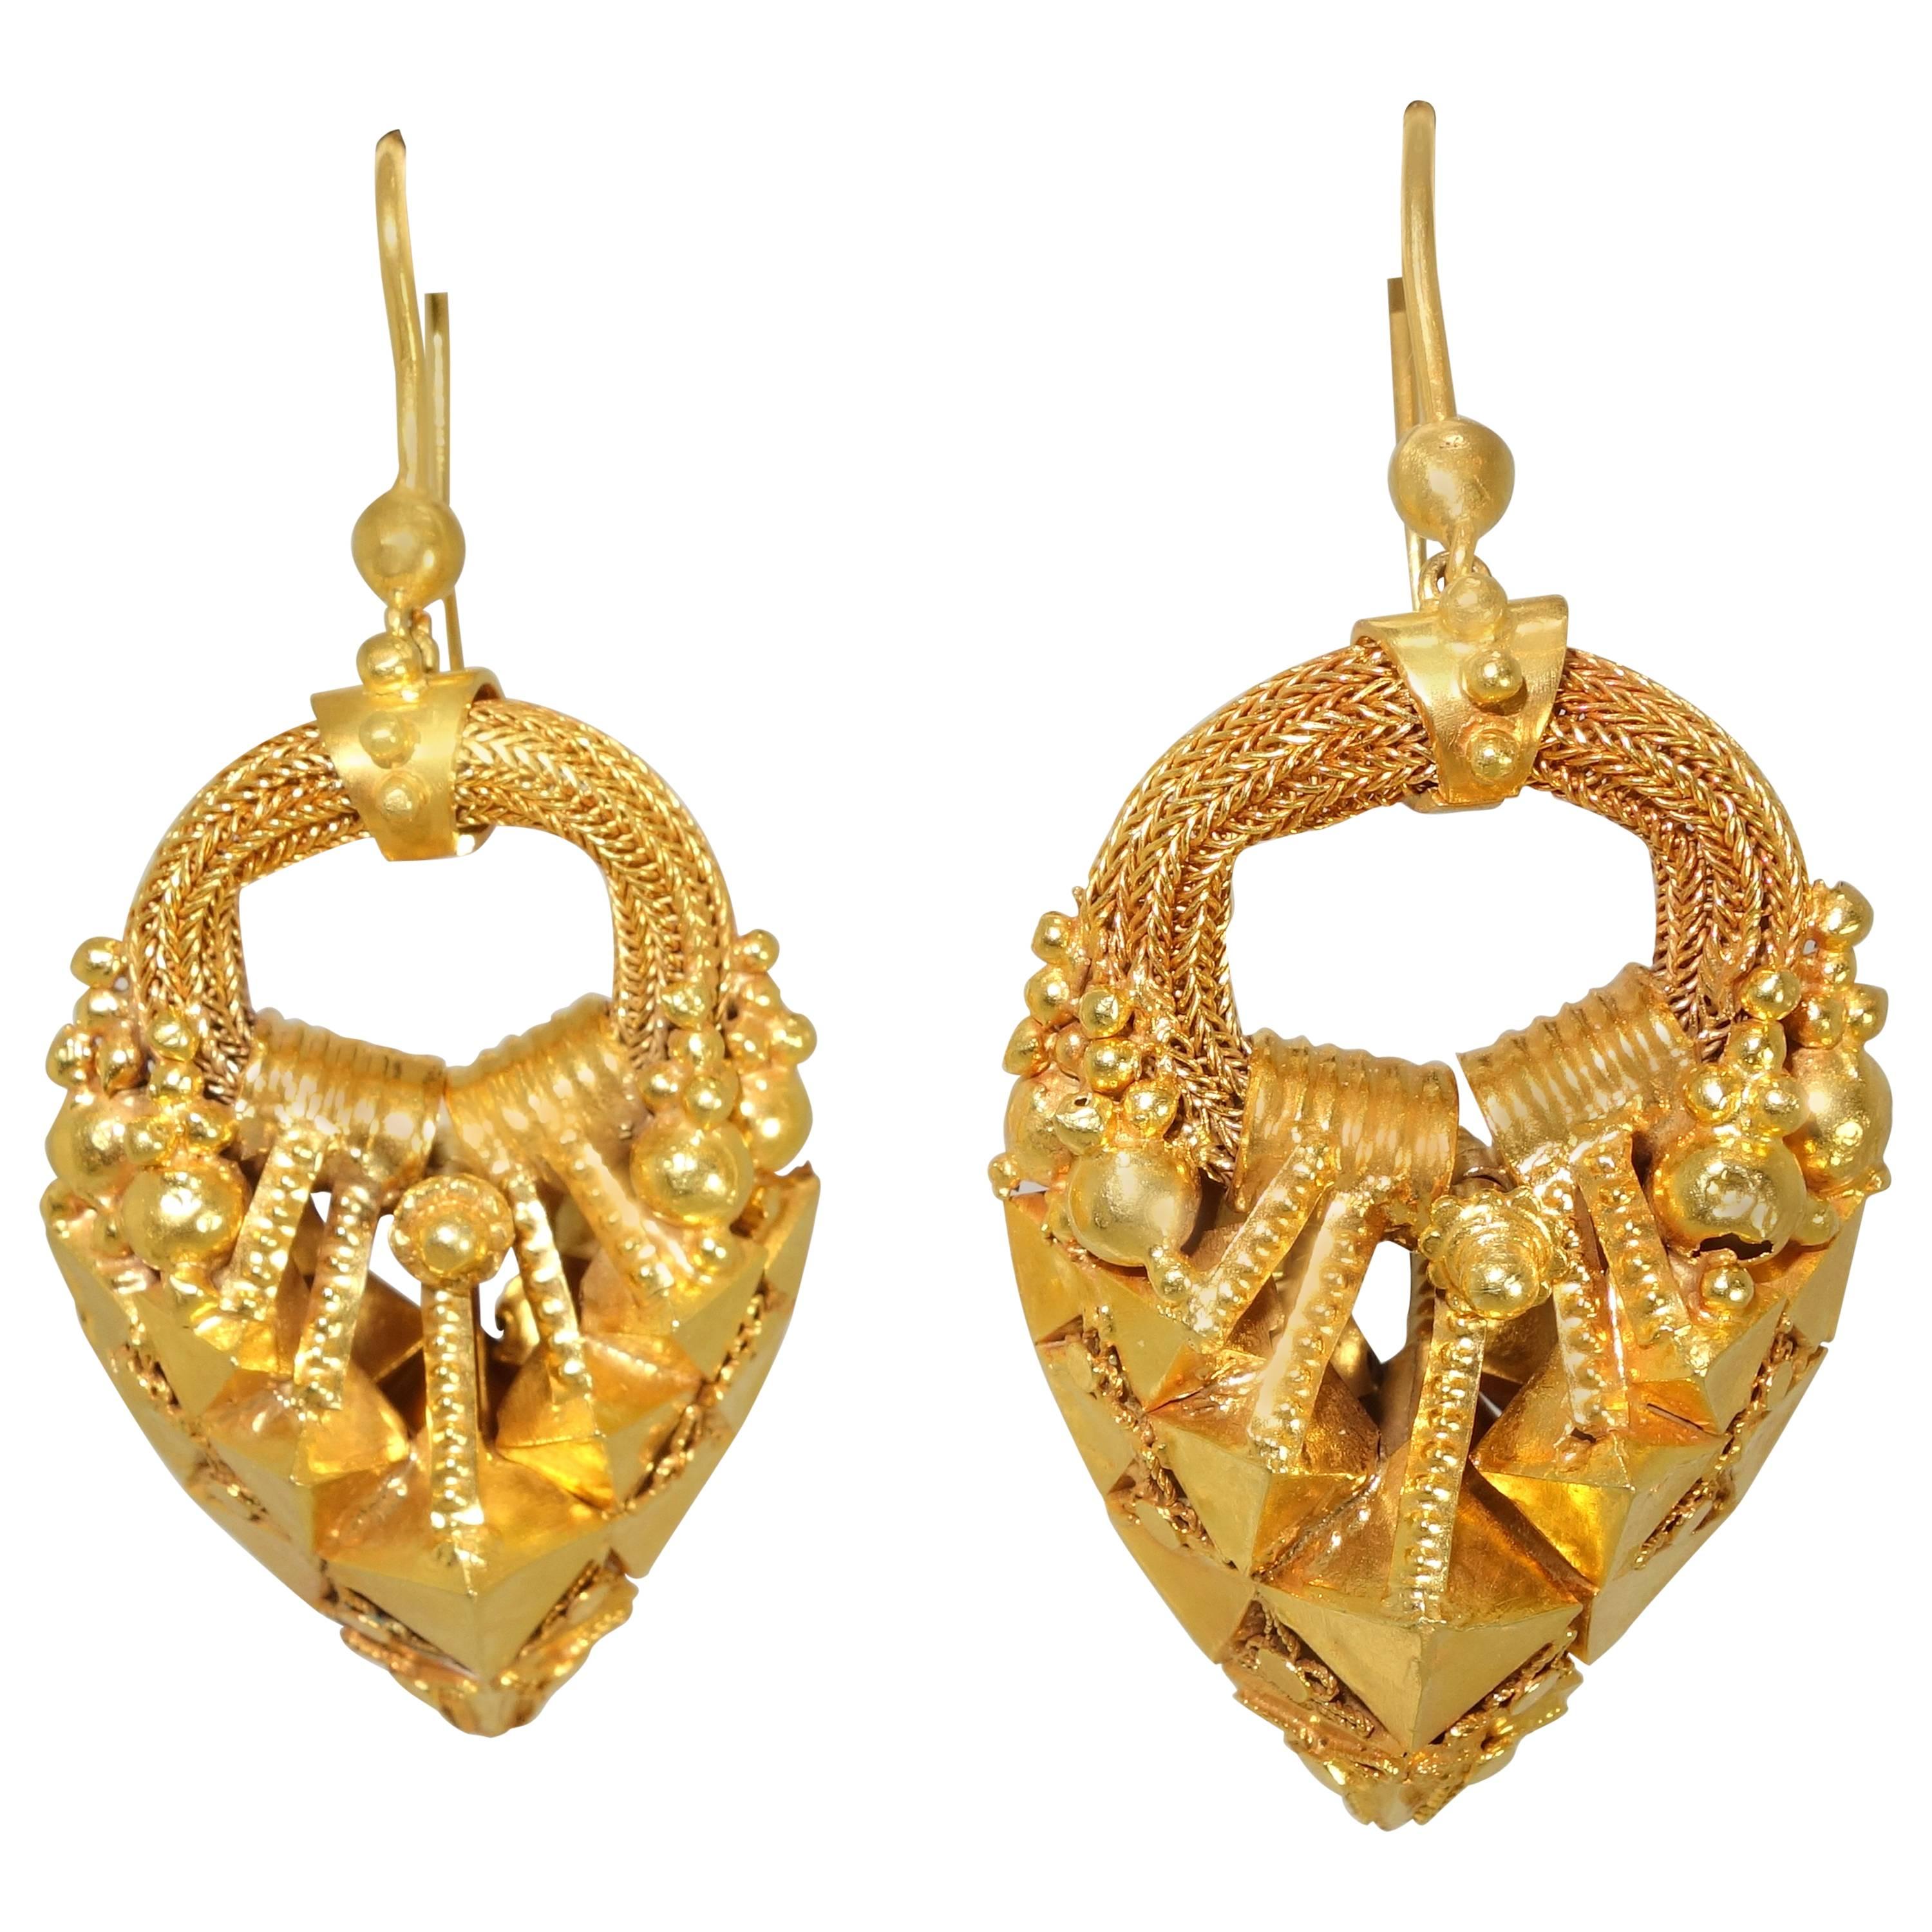 1890s Antique Gold Earrings